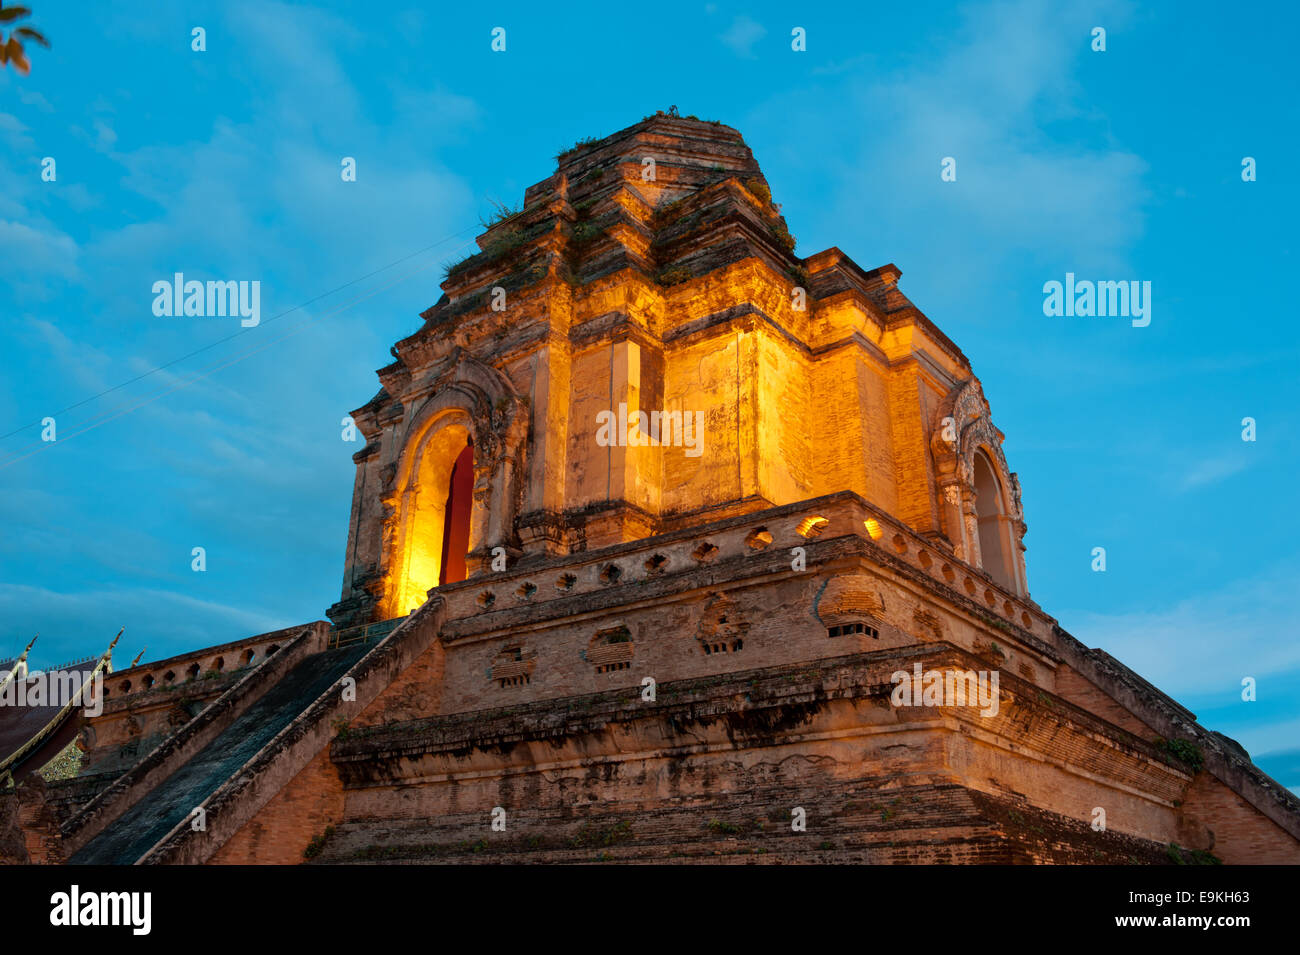 Wat Chedi Luang stupa at dusk in Chiang Mai, Thailand. Stock Photo